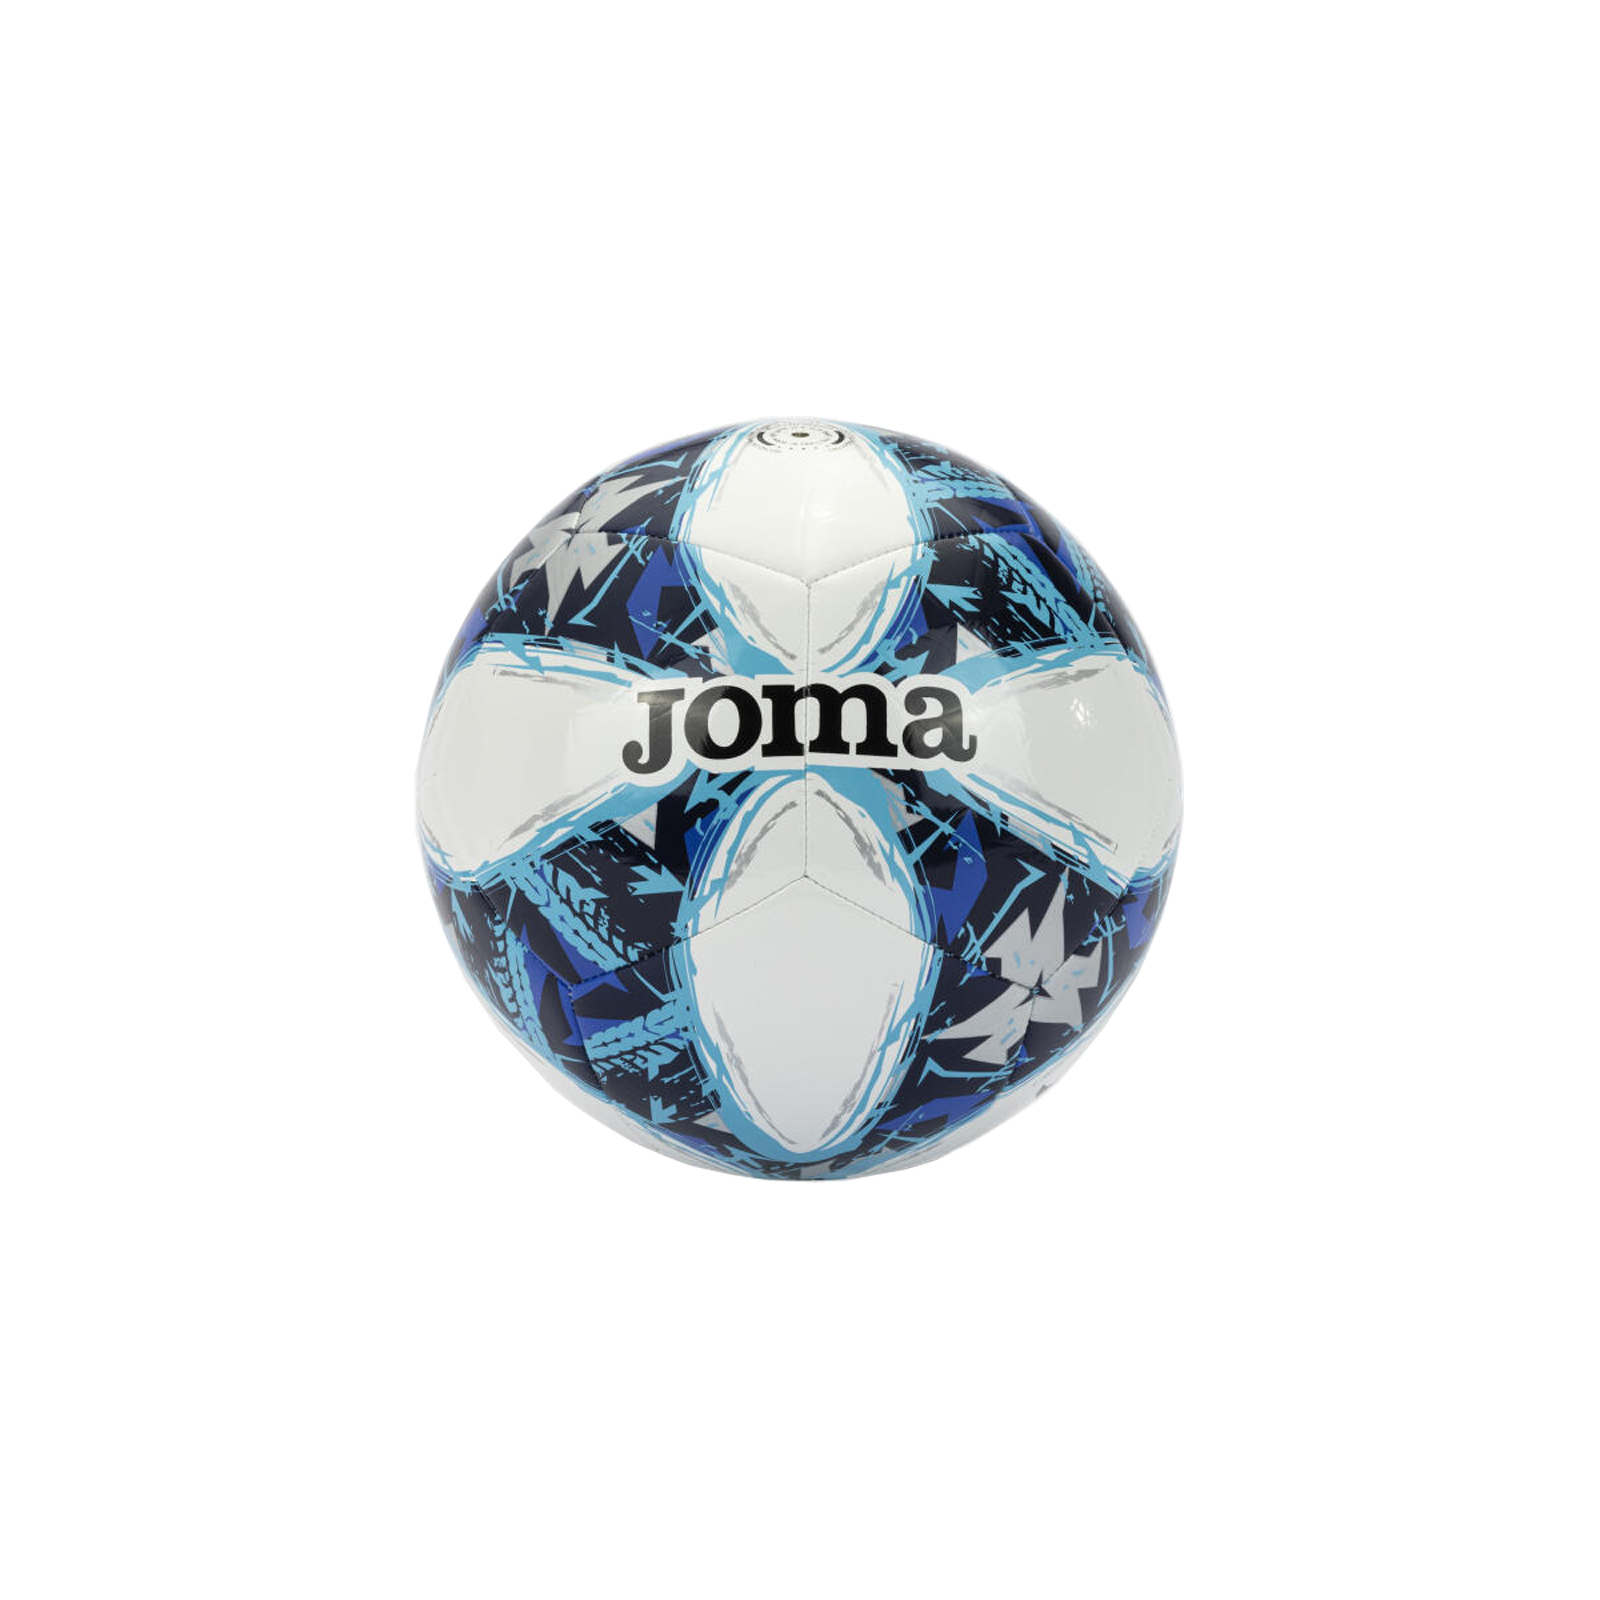 Мяч футбольный Joma Challenge III 401484.207 білий, бірюзовий Уні 5 (8445954786921)